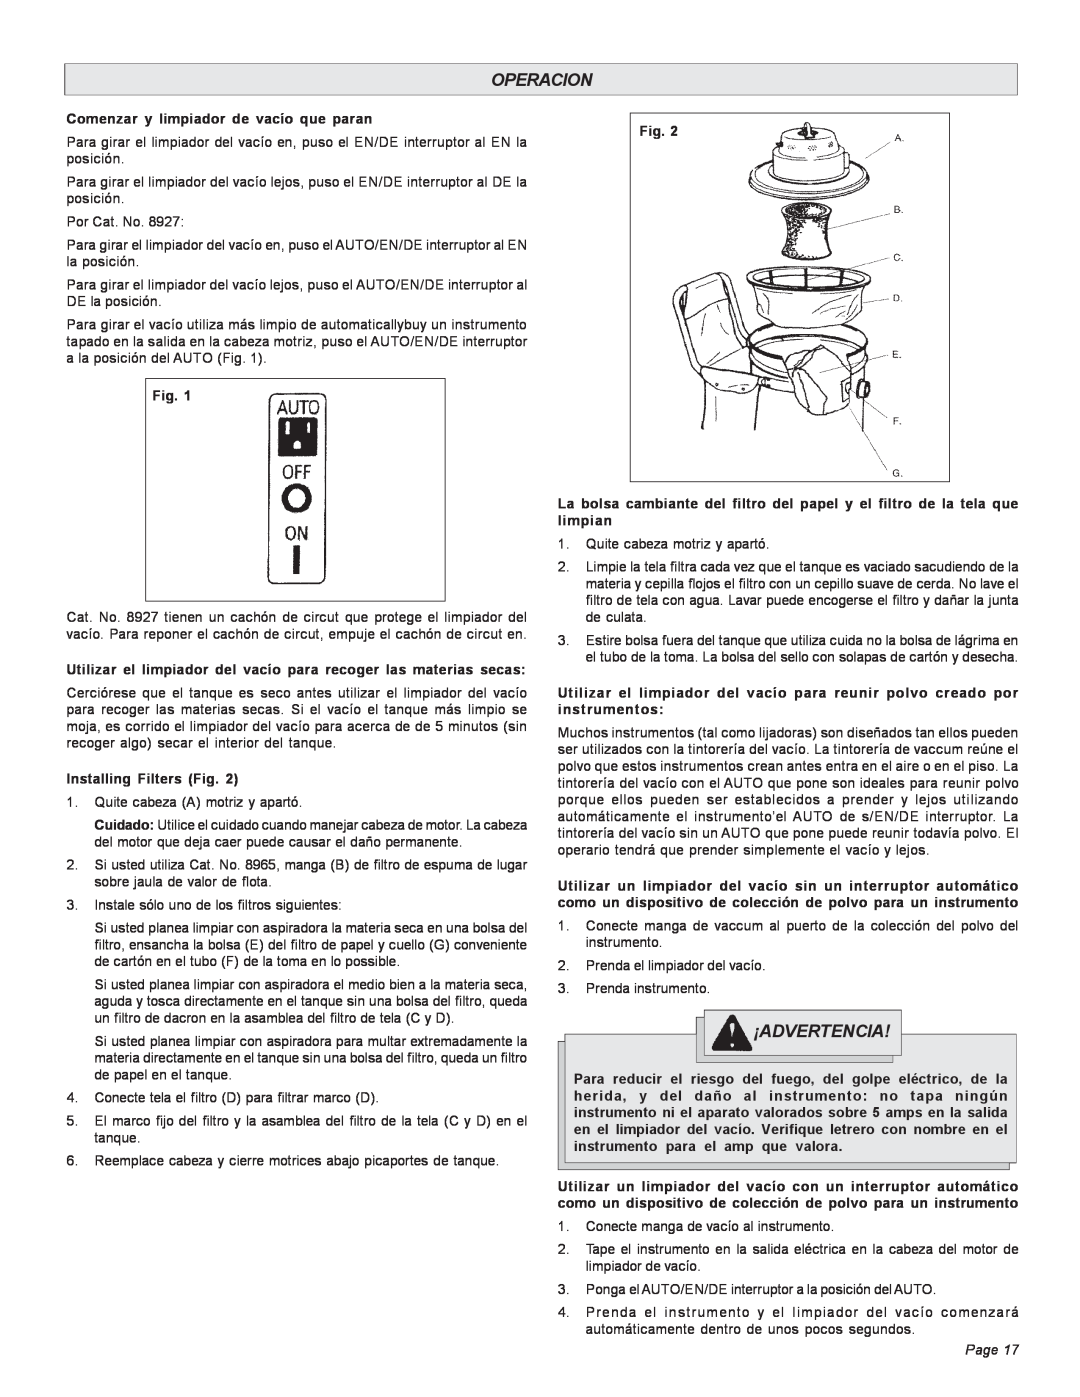 Milwaukee Heavy-Duty Commercial Vacuum manual Operacion, ¡Advertencia, Page 